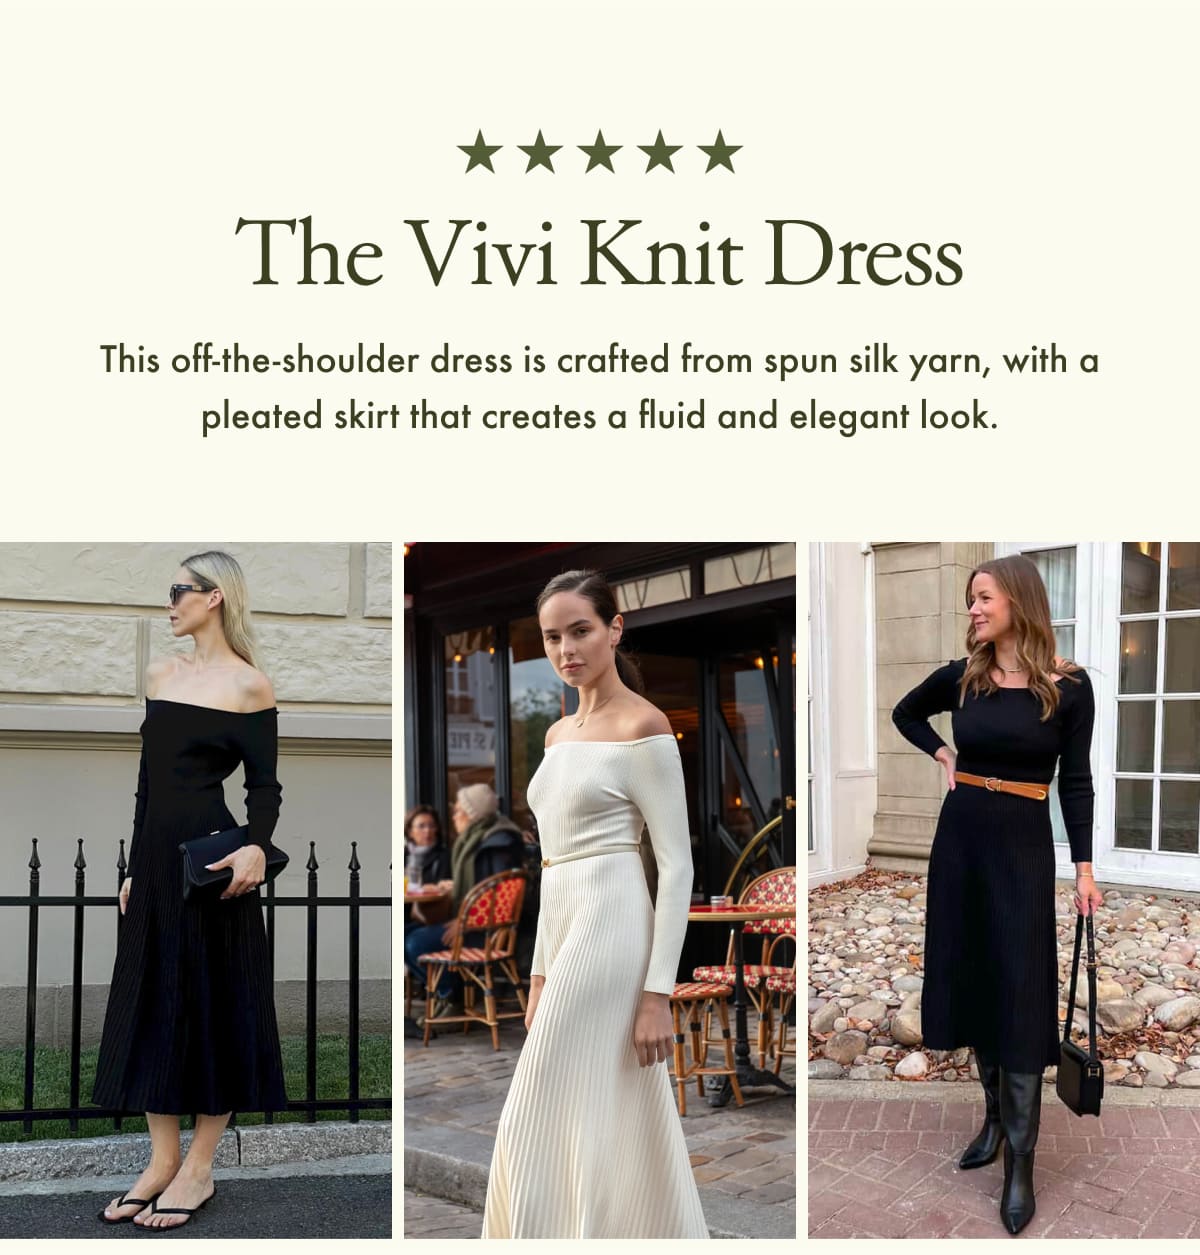 The Vivi Knit Dress